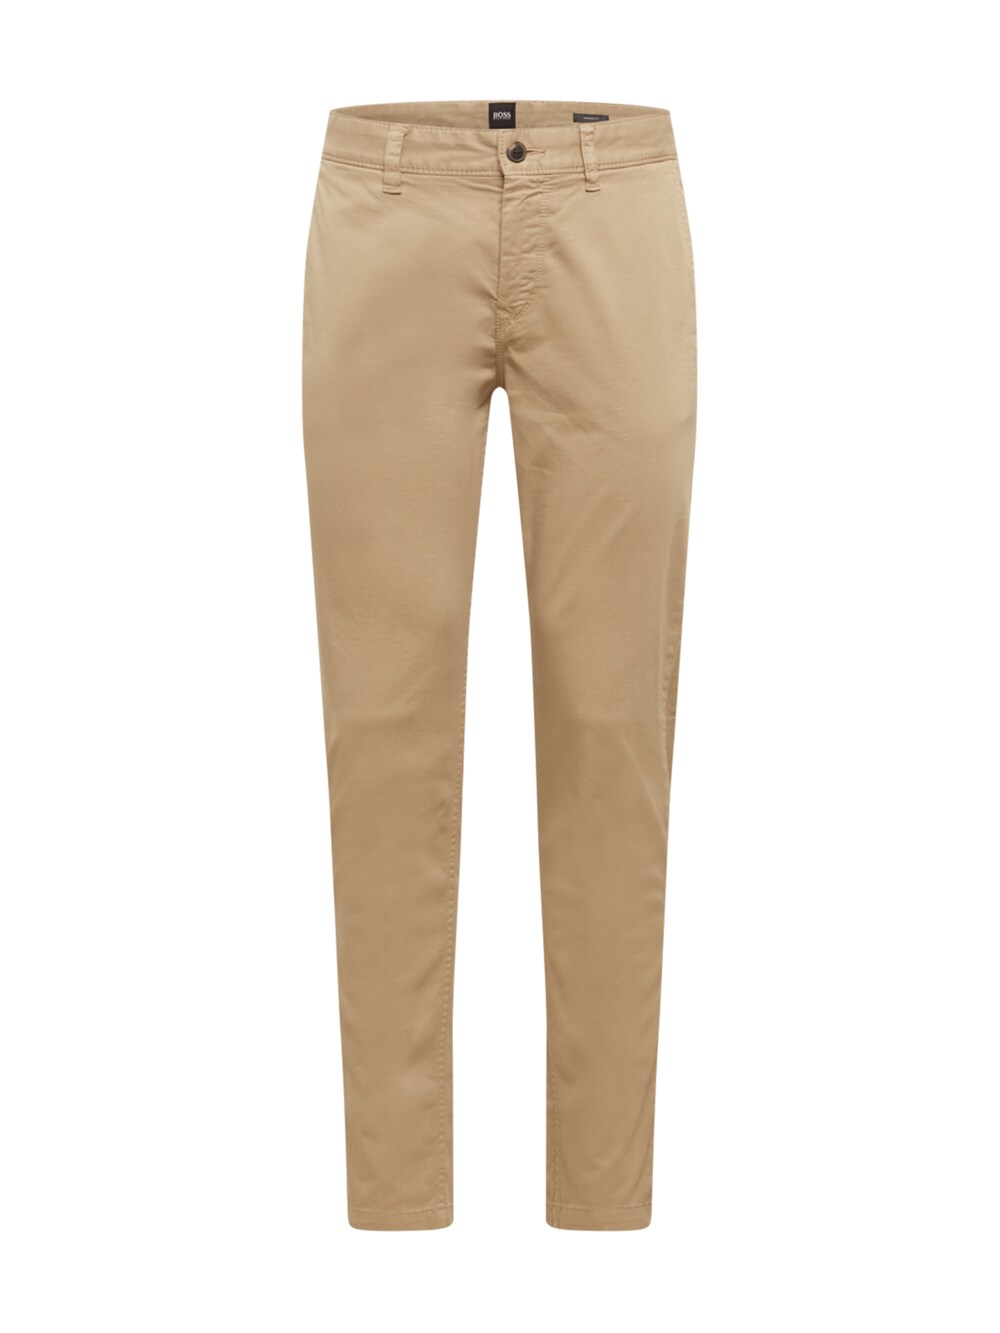 Узкие брюки BOSS Orange Schino-Taber D, светло-коричневый брюки boss брюки schino taber